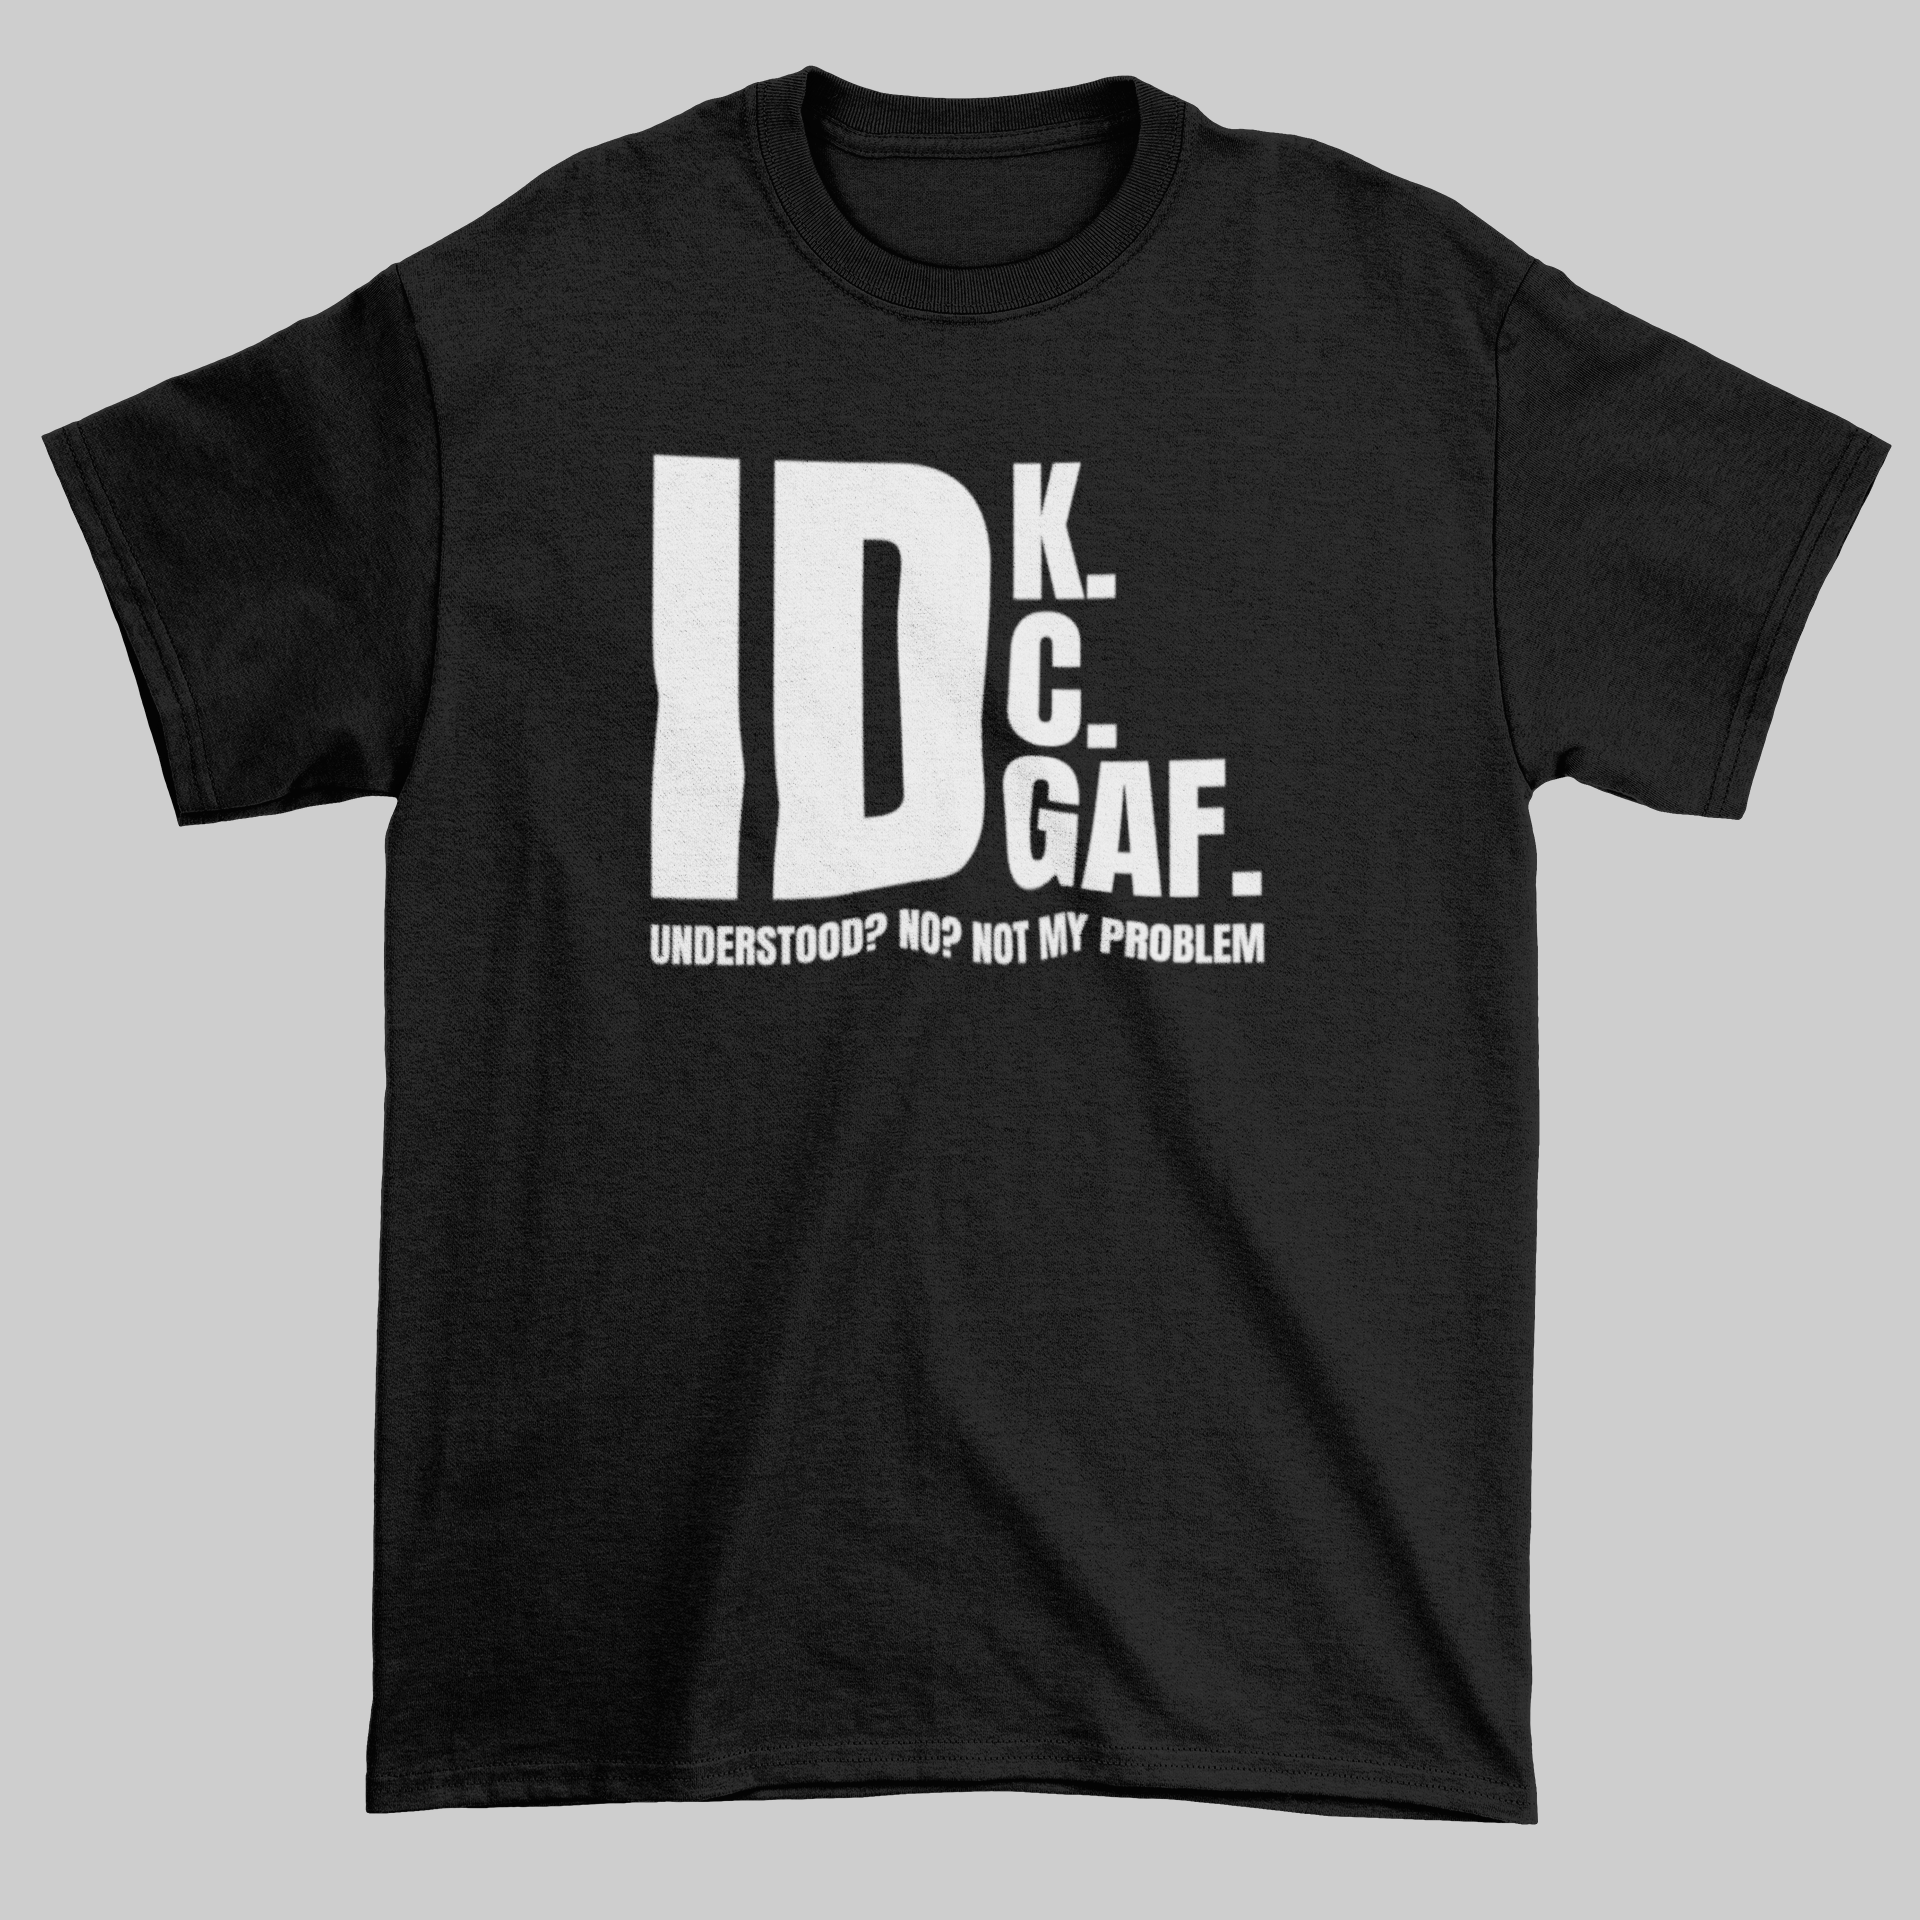 IDK IDC IDGAF - Jay's Custom Prints